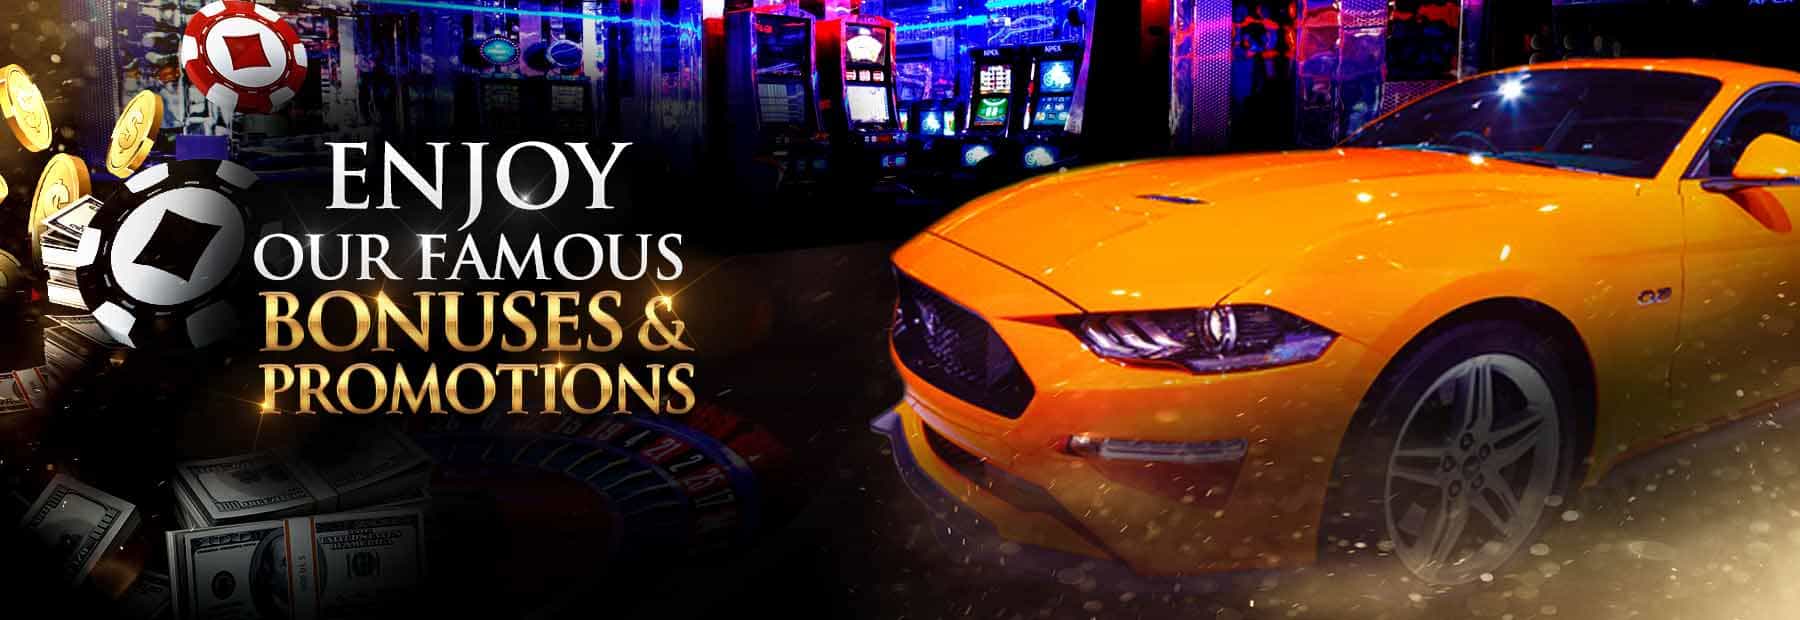 myb casino bonuses